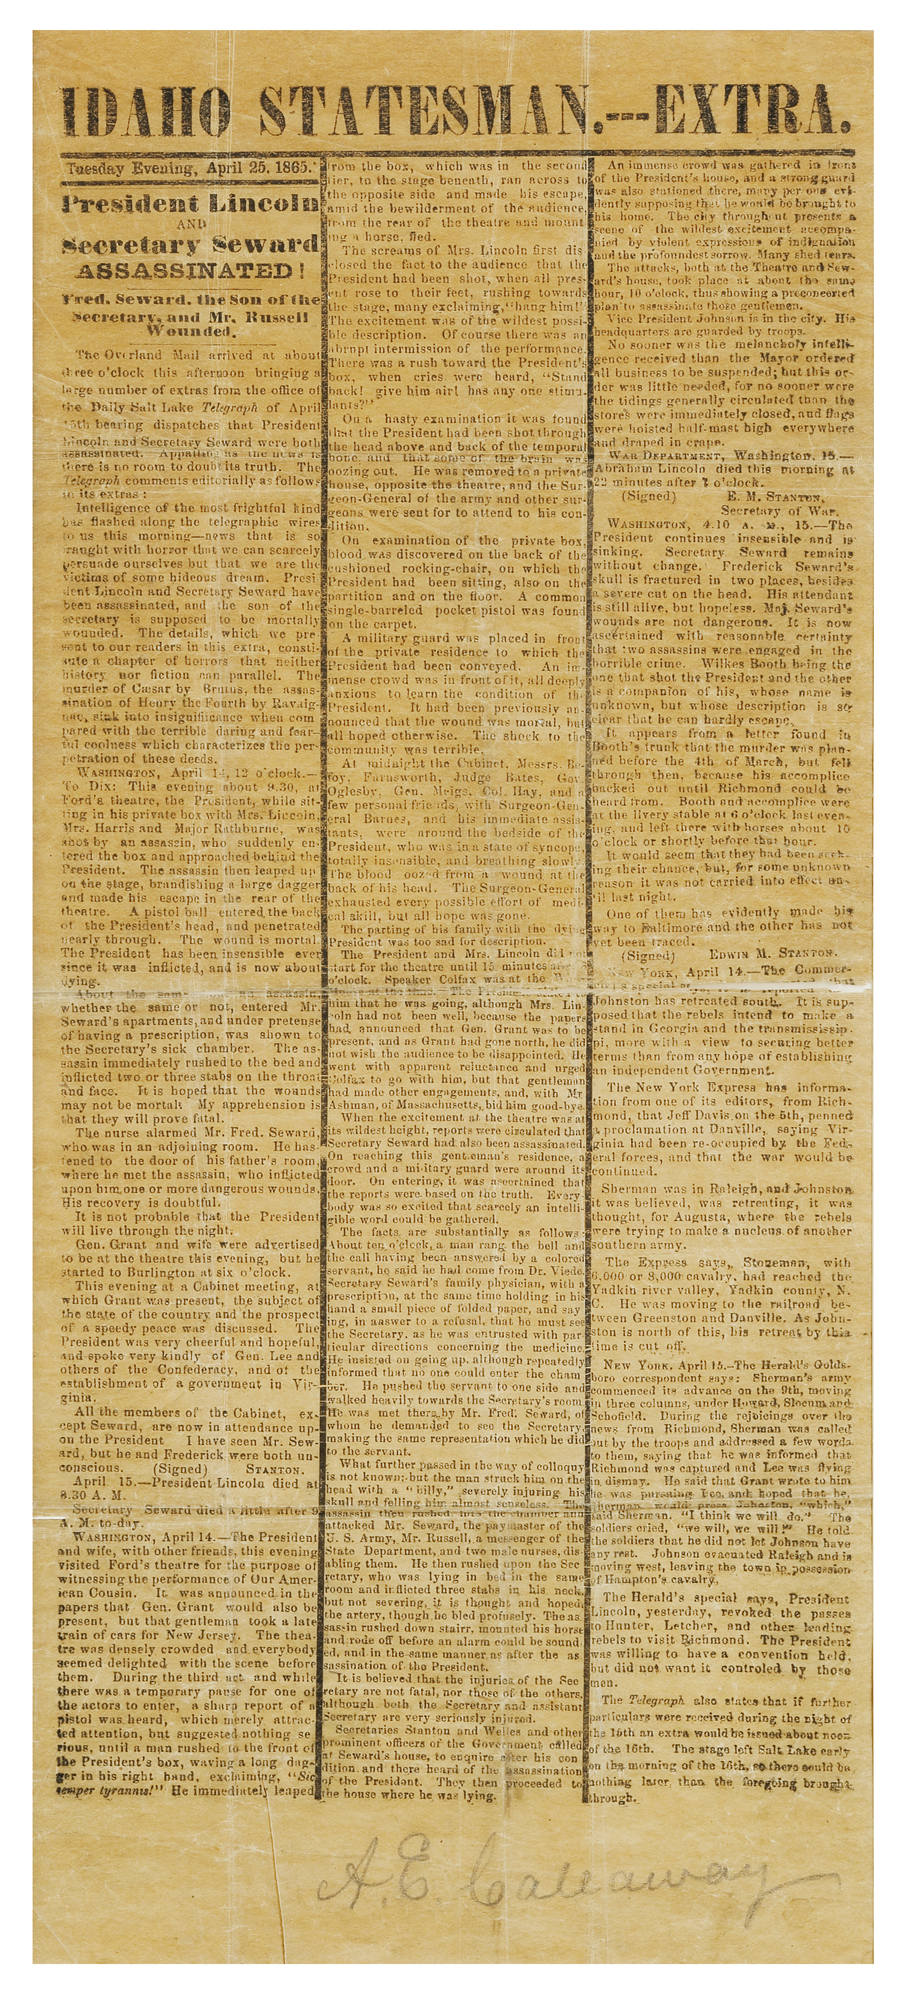 Idaho Statesman, April 25, 1865. 